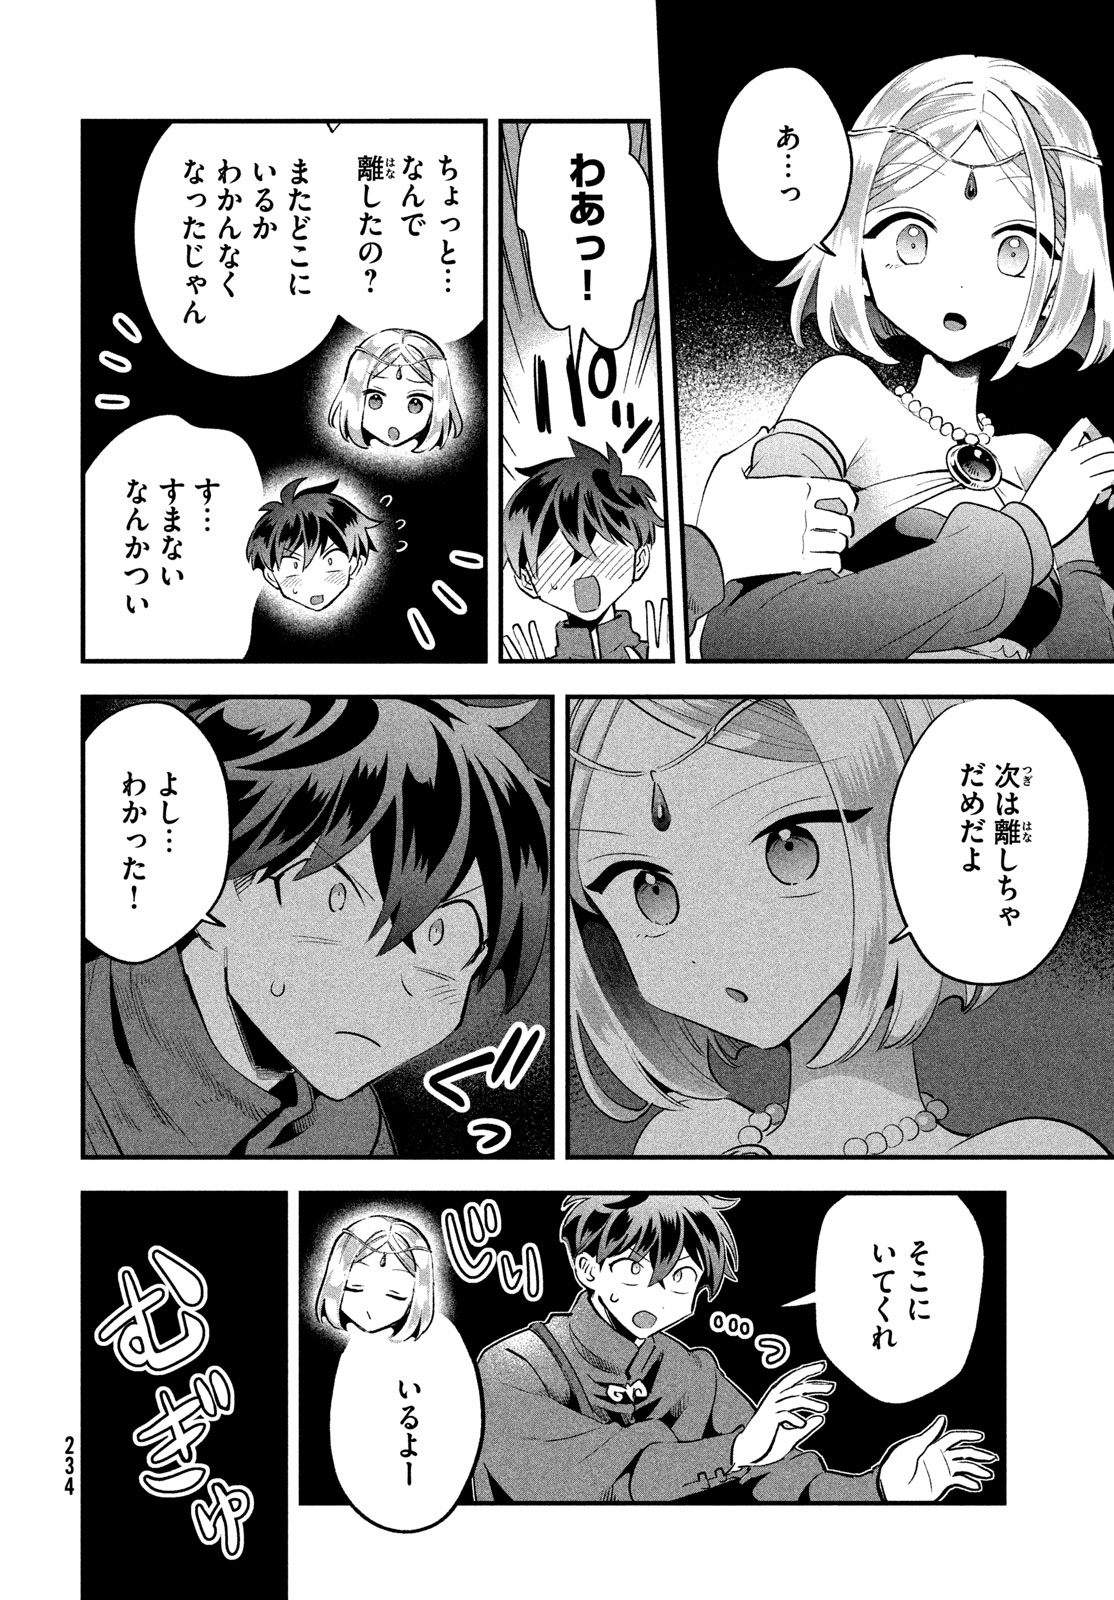 7-nin no Nemuri Hime - Chapter 37 - Page 2